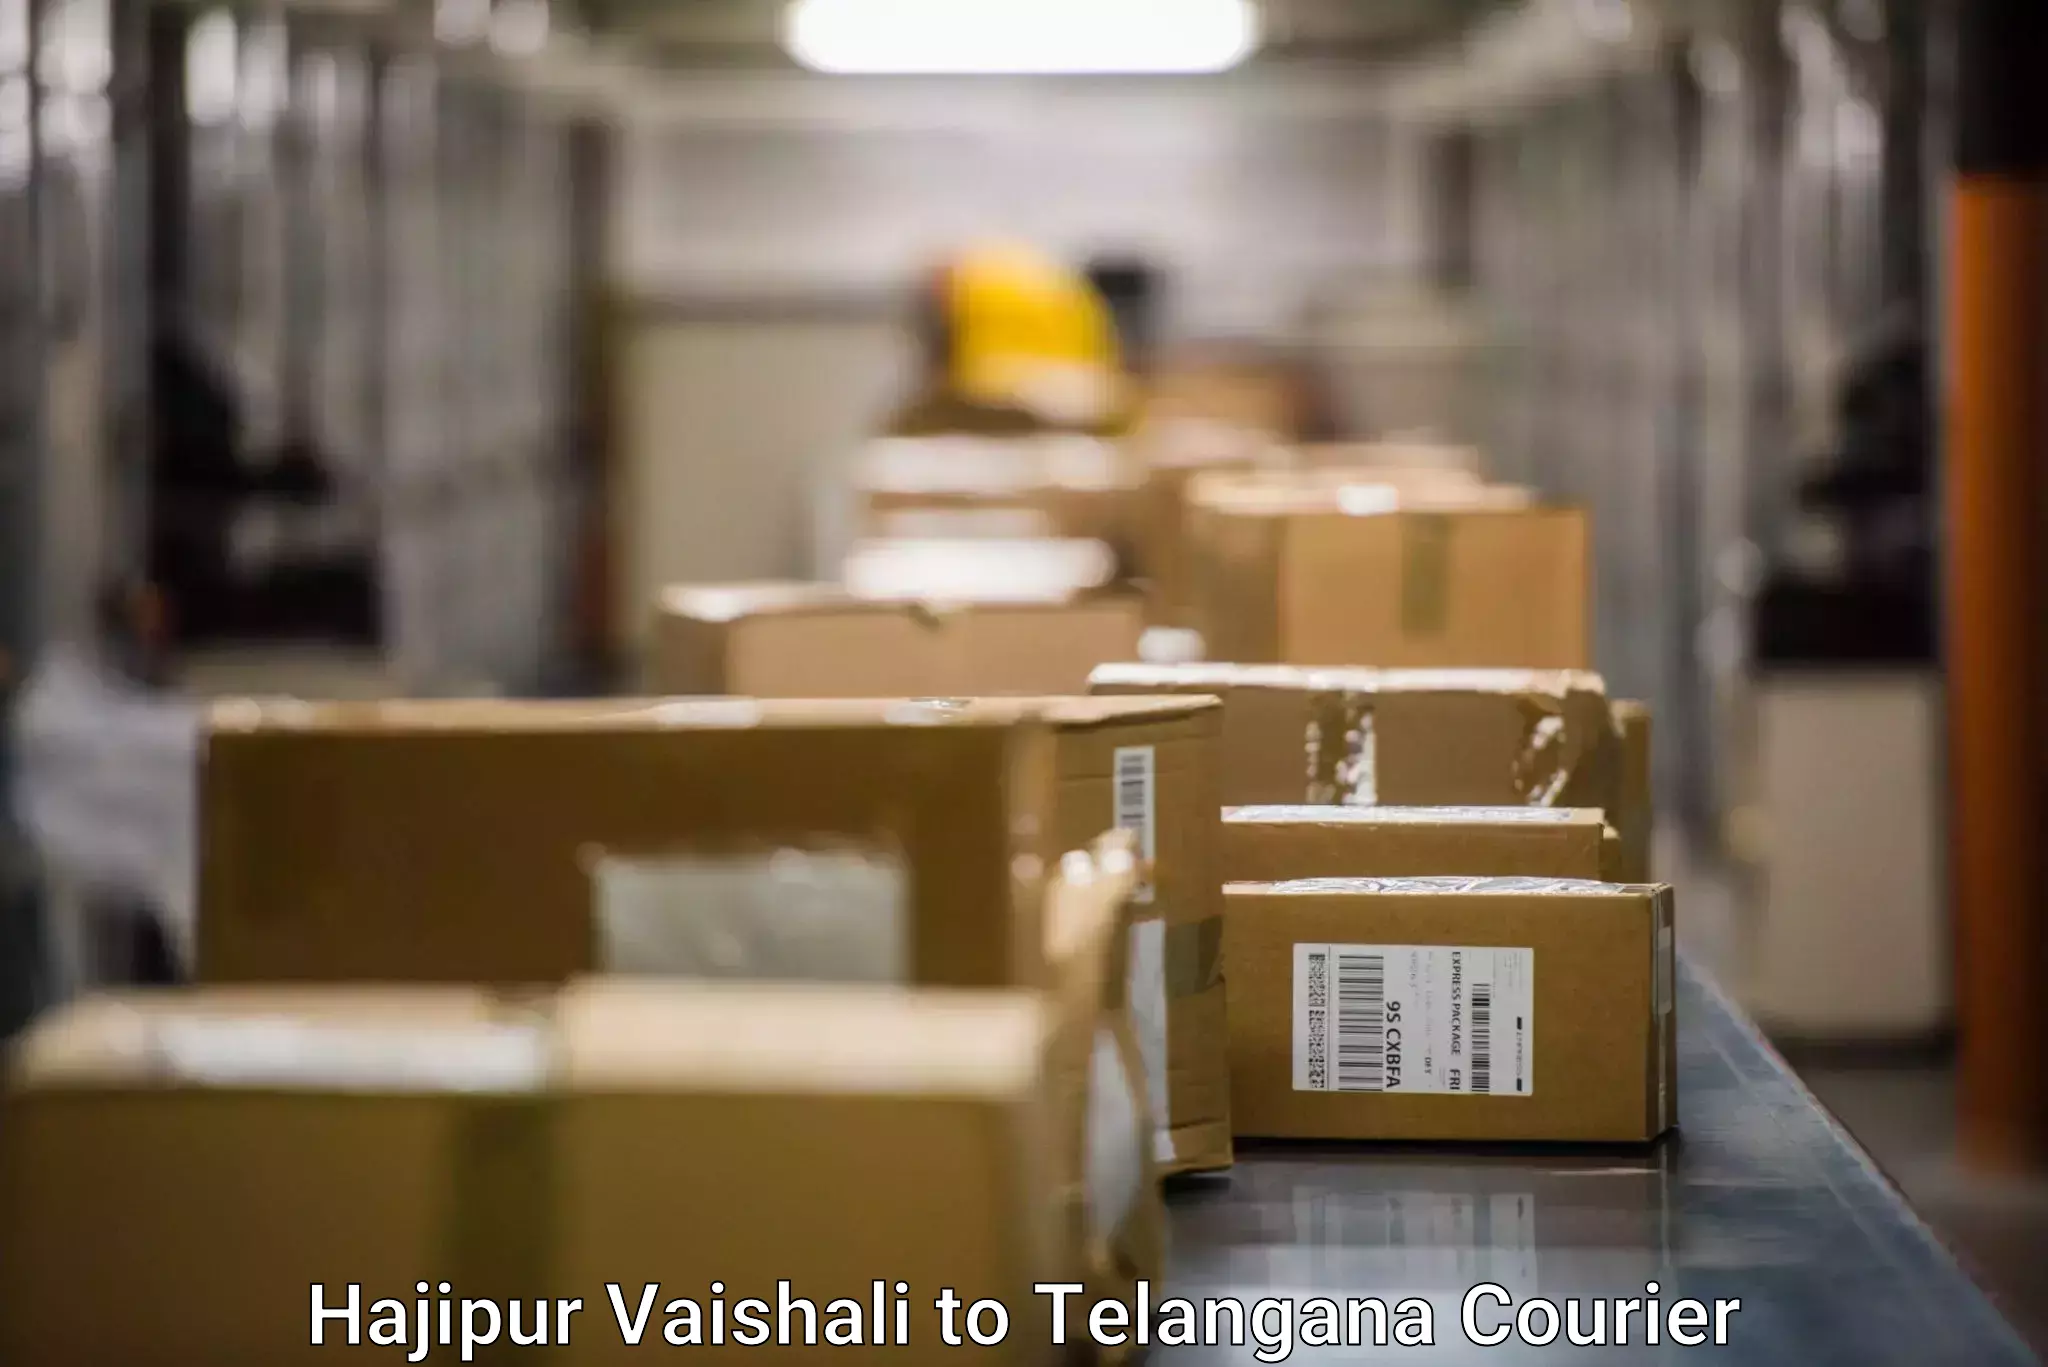 Courier service partnerships Hajipur Vaishali to Shadnagar